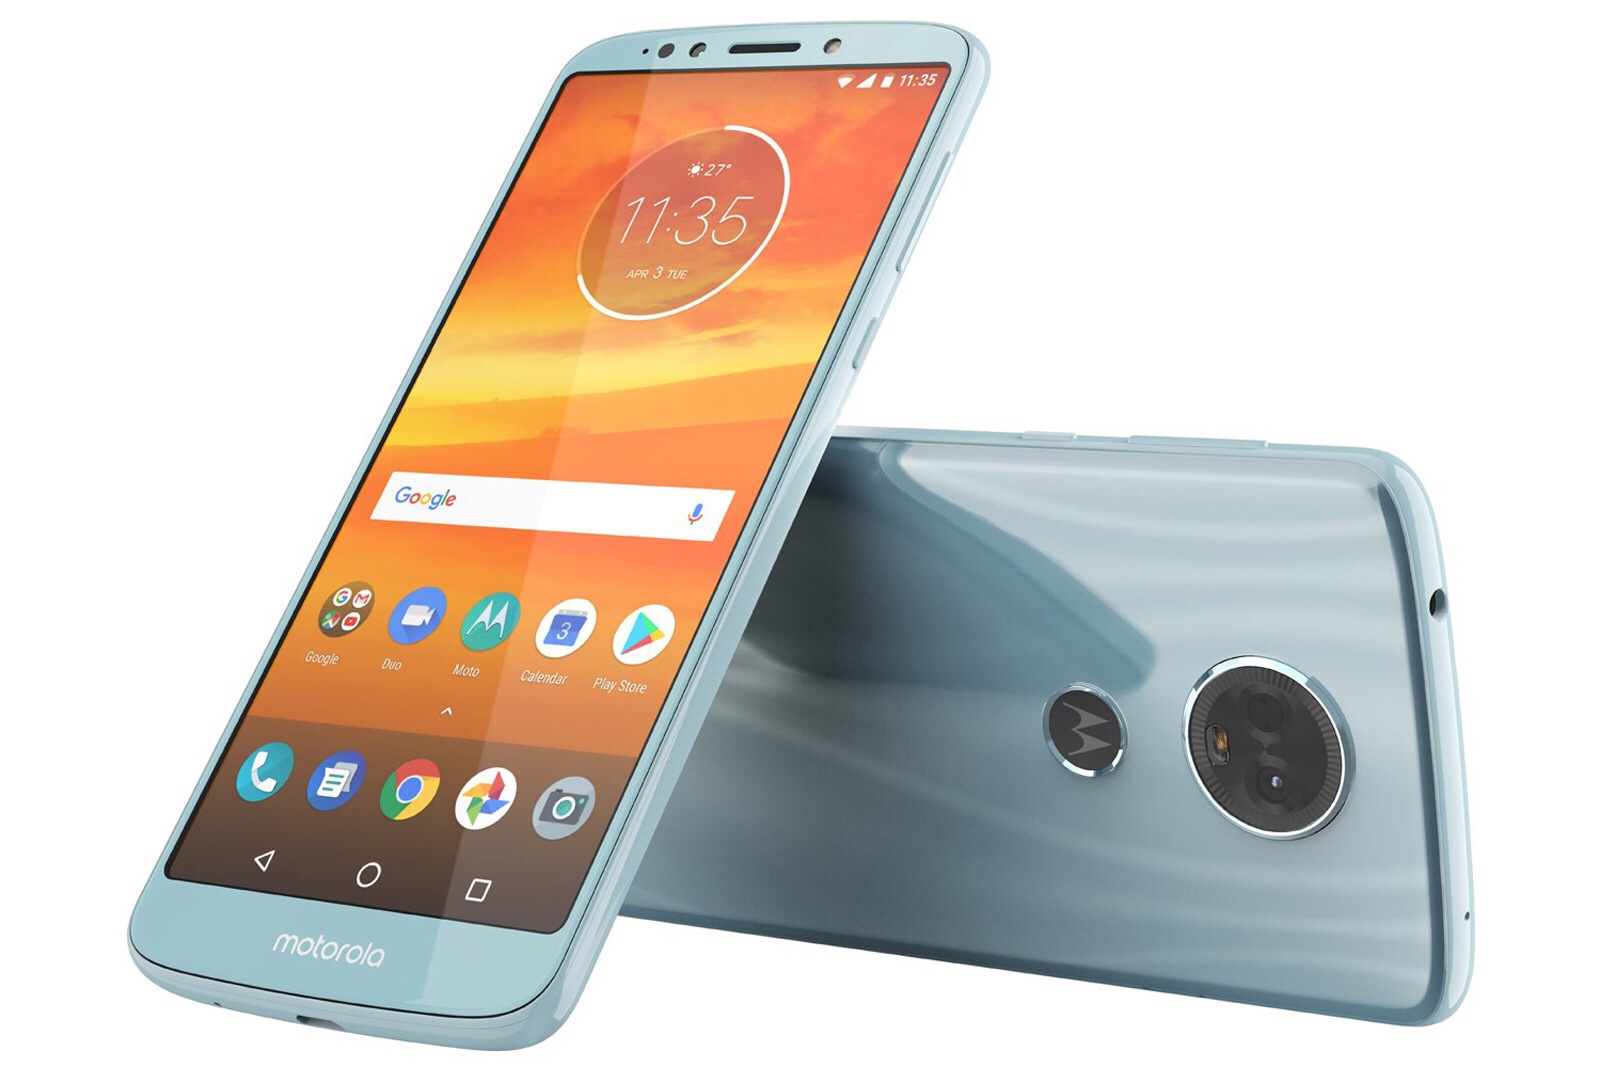 Leak: Motorola M5 Plus may come with a big screen in sleek body